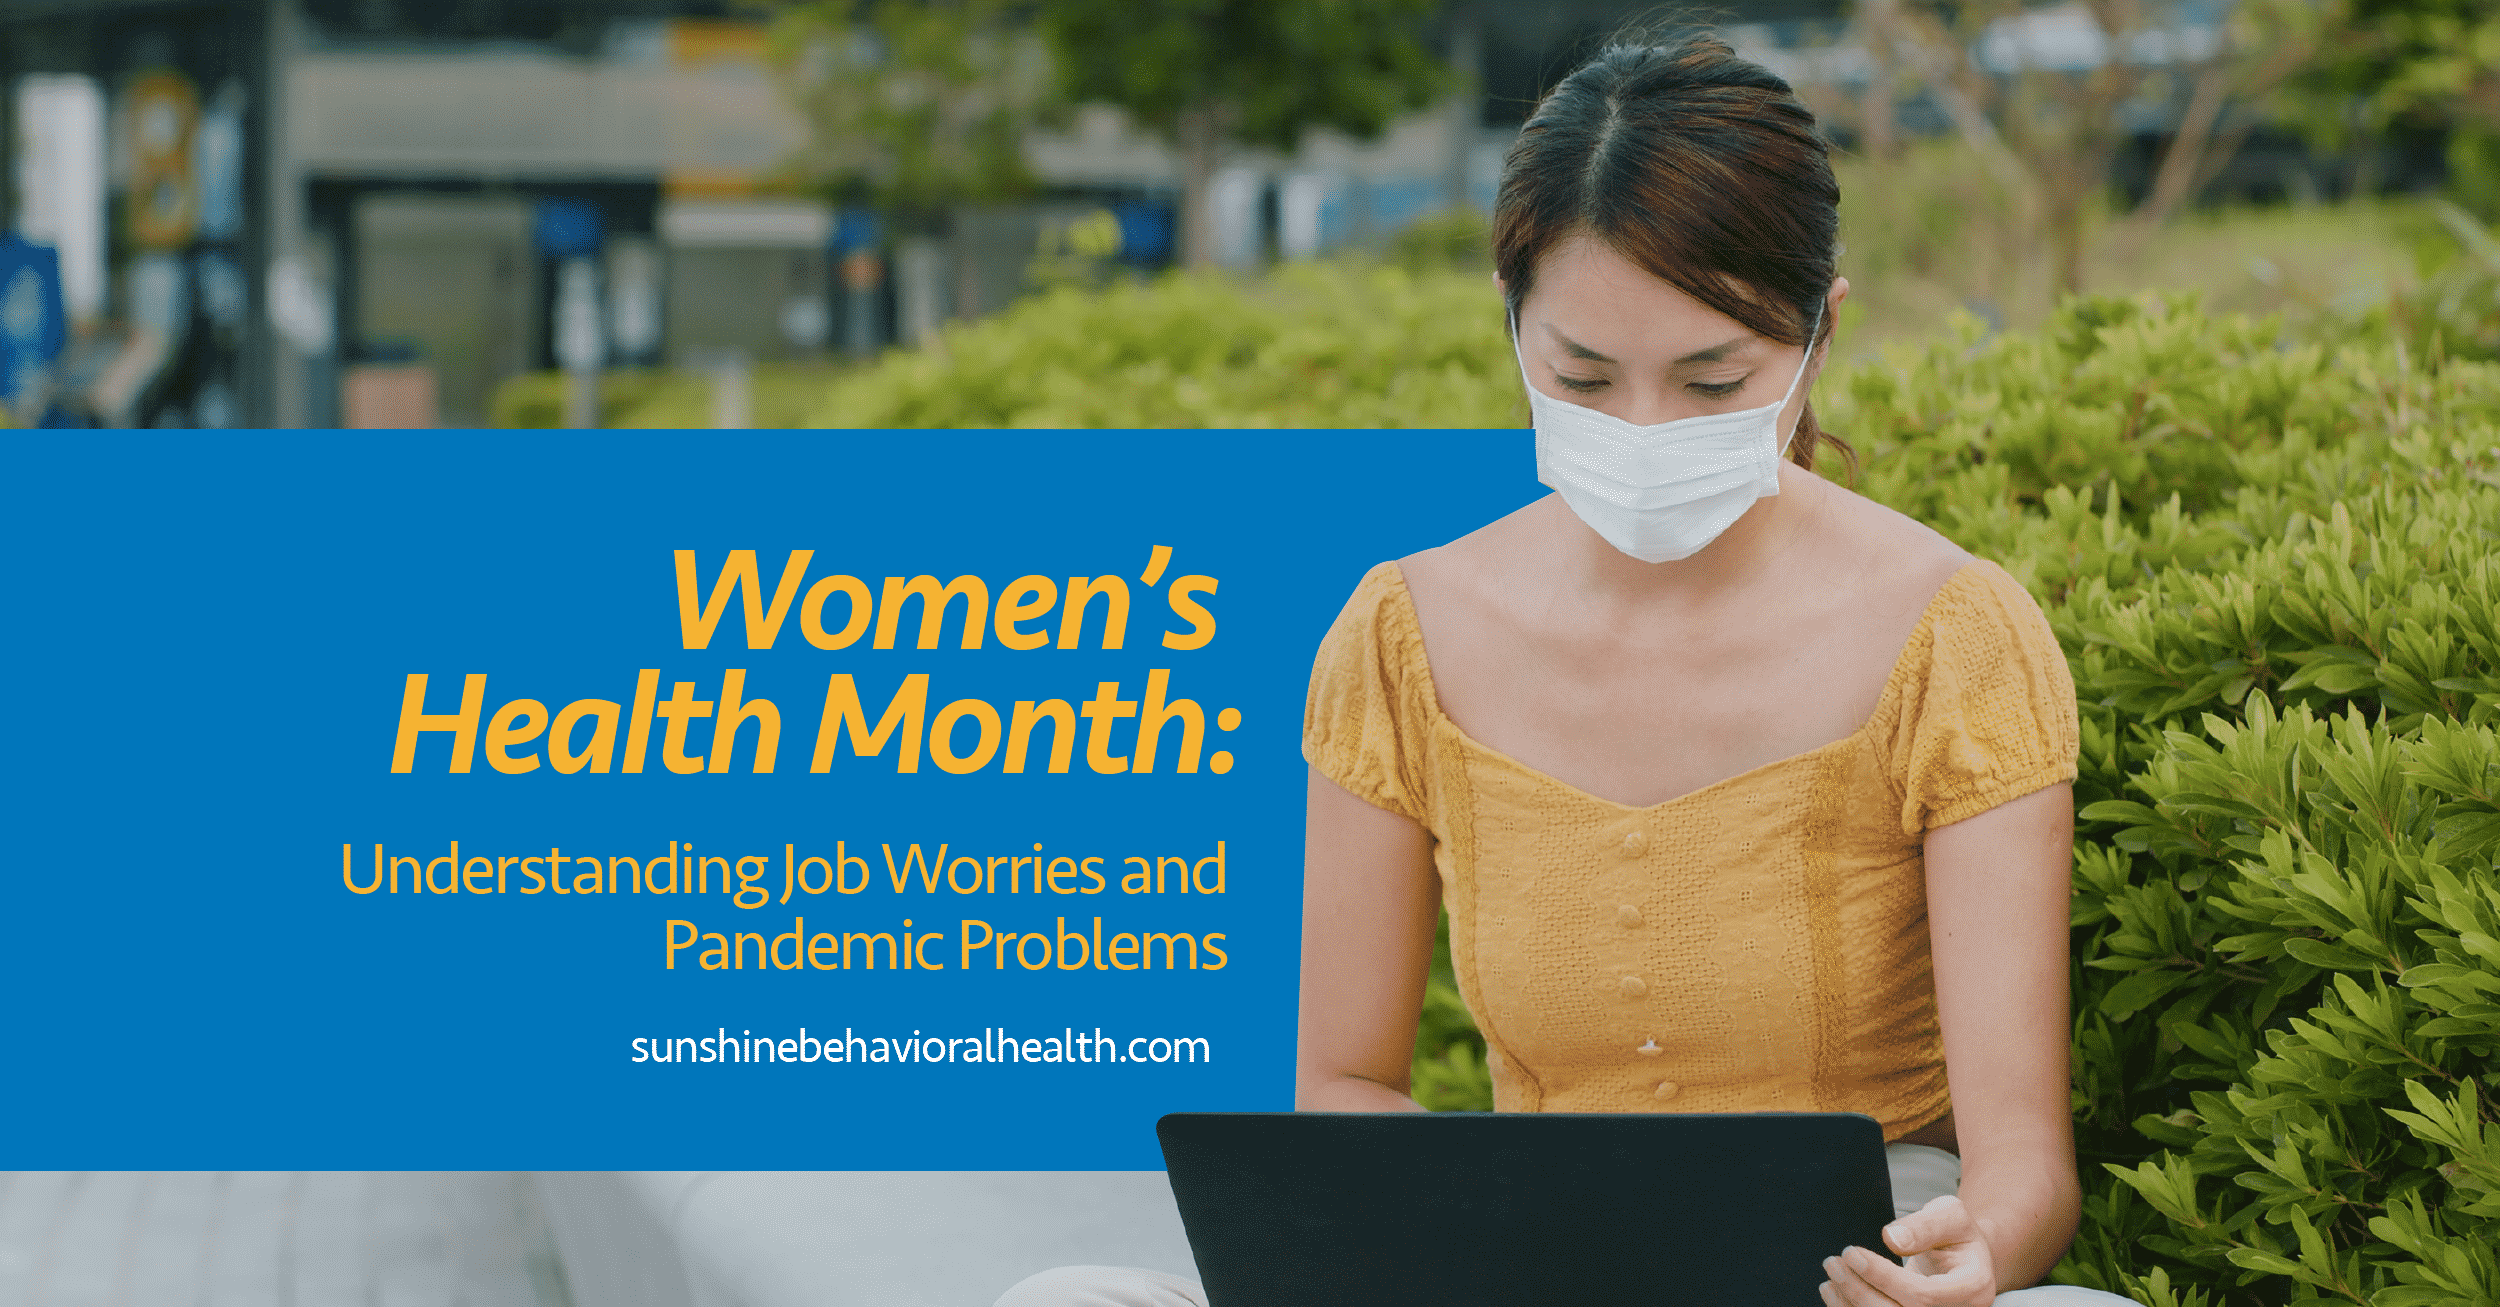 Women’s Health Month: Understanding Job Worries and Pandemic Problems